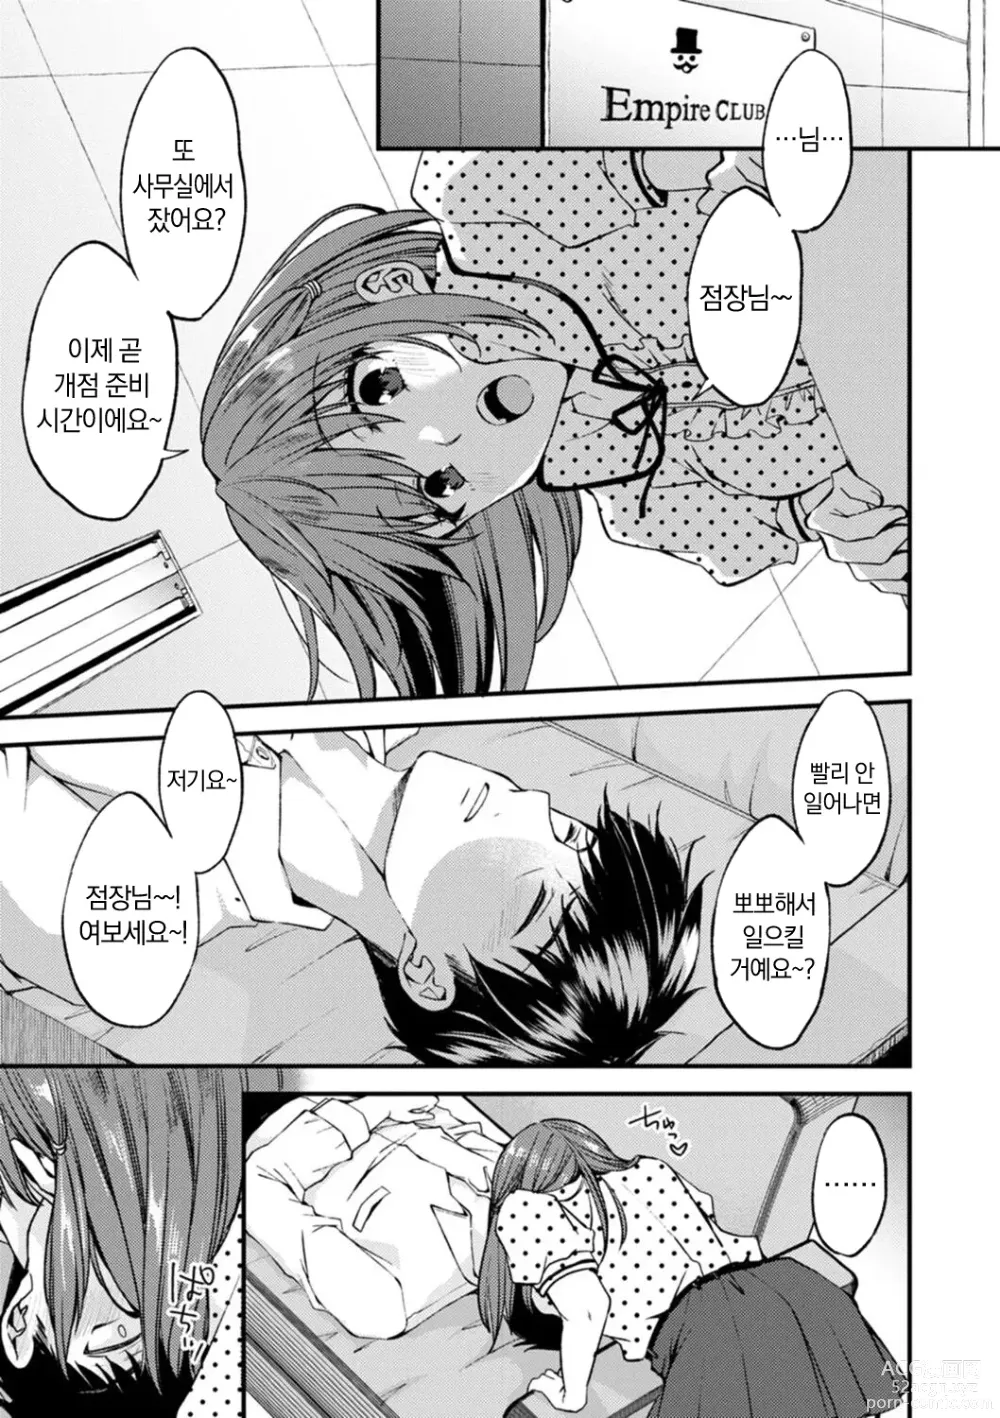 Page 23 of manga 취미가 바니걸이라니 정말이에요?